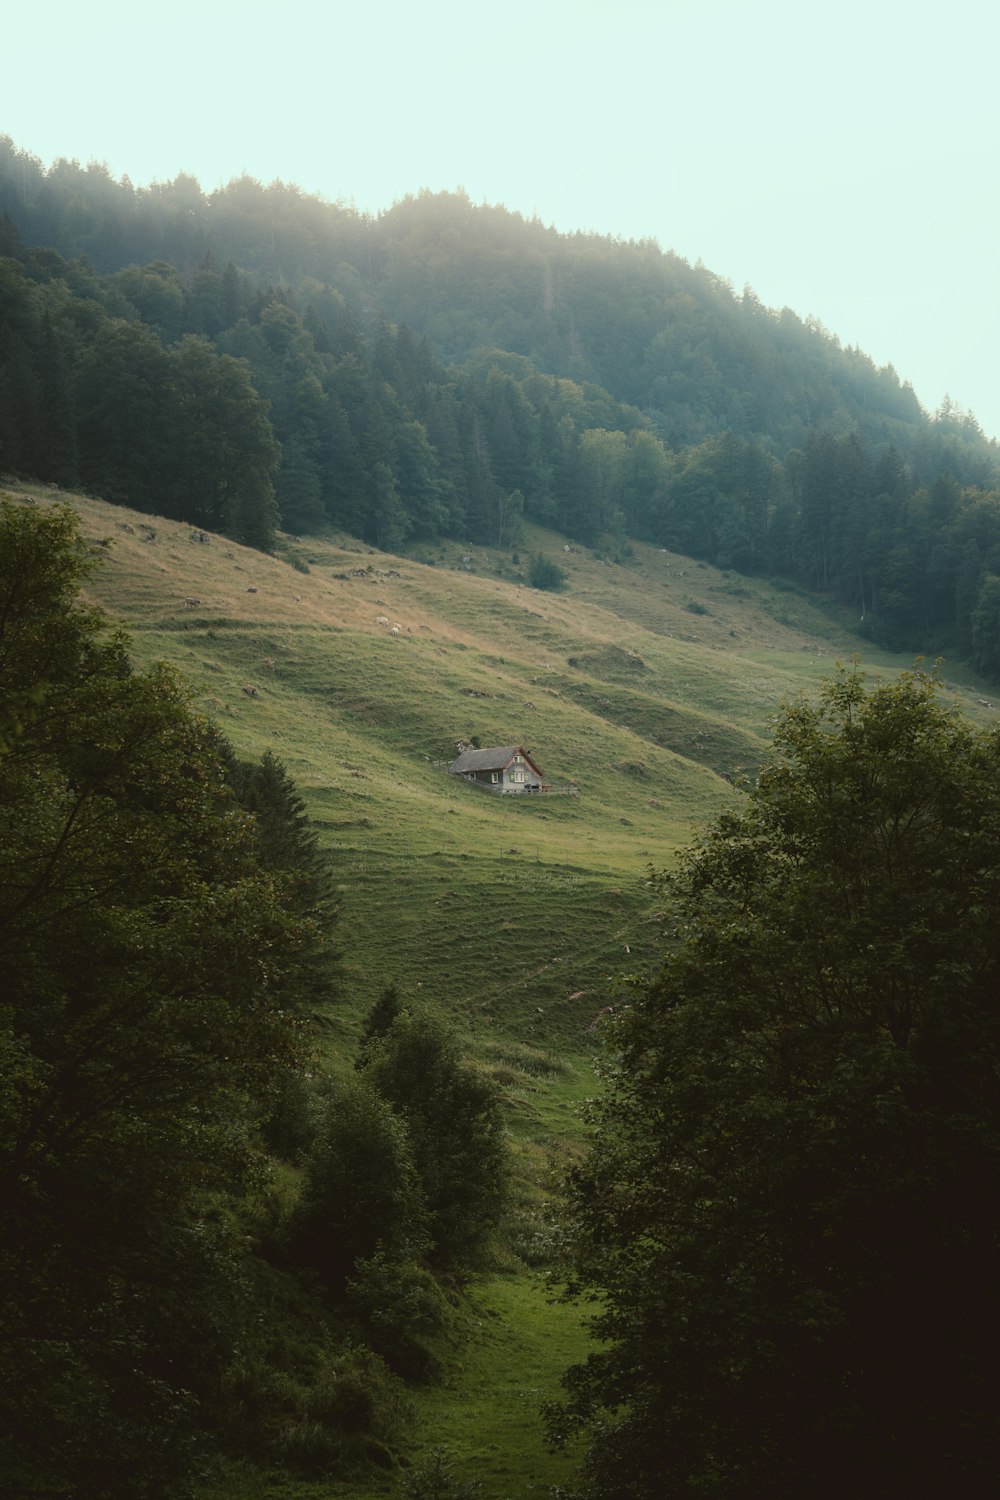 a house on a hill